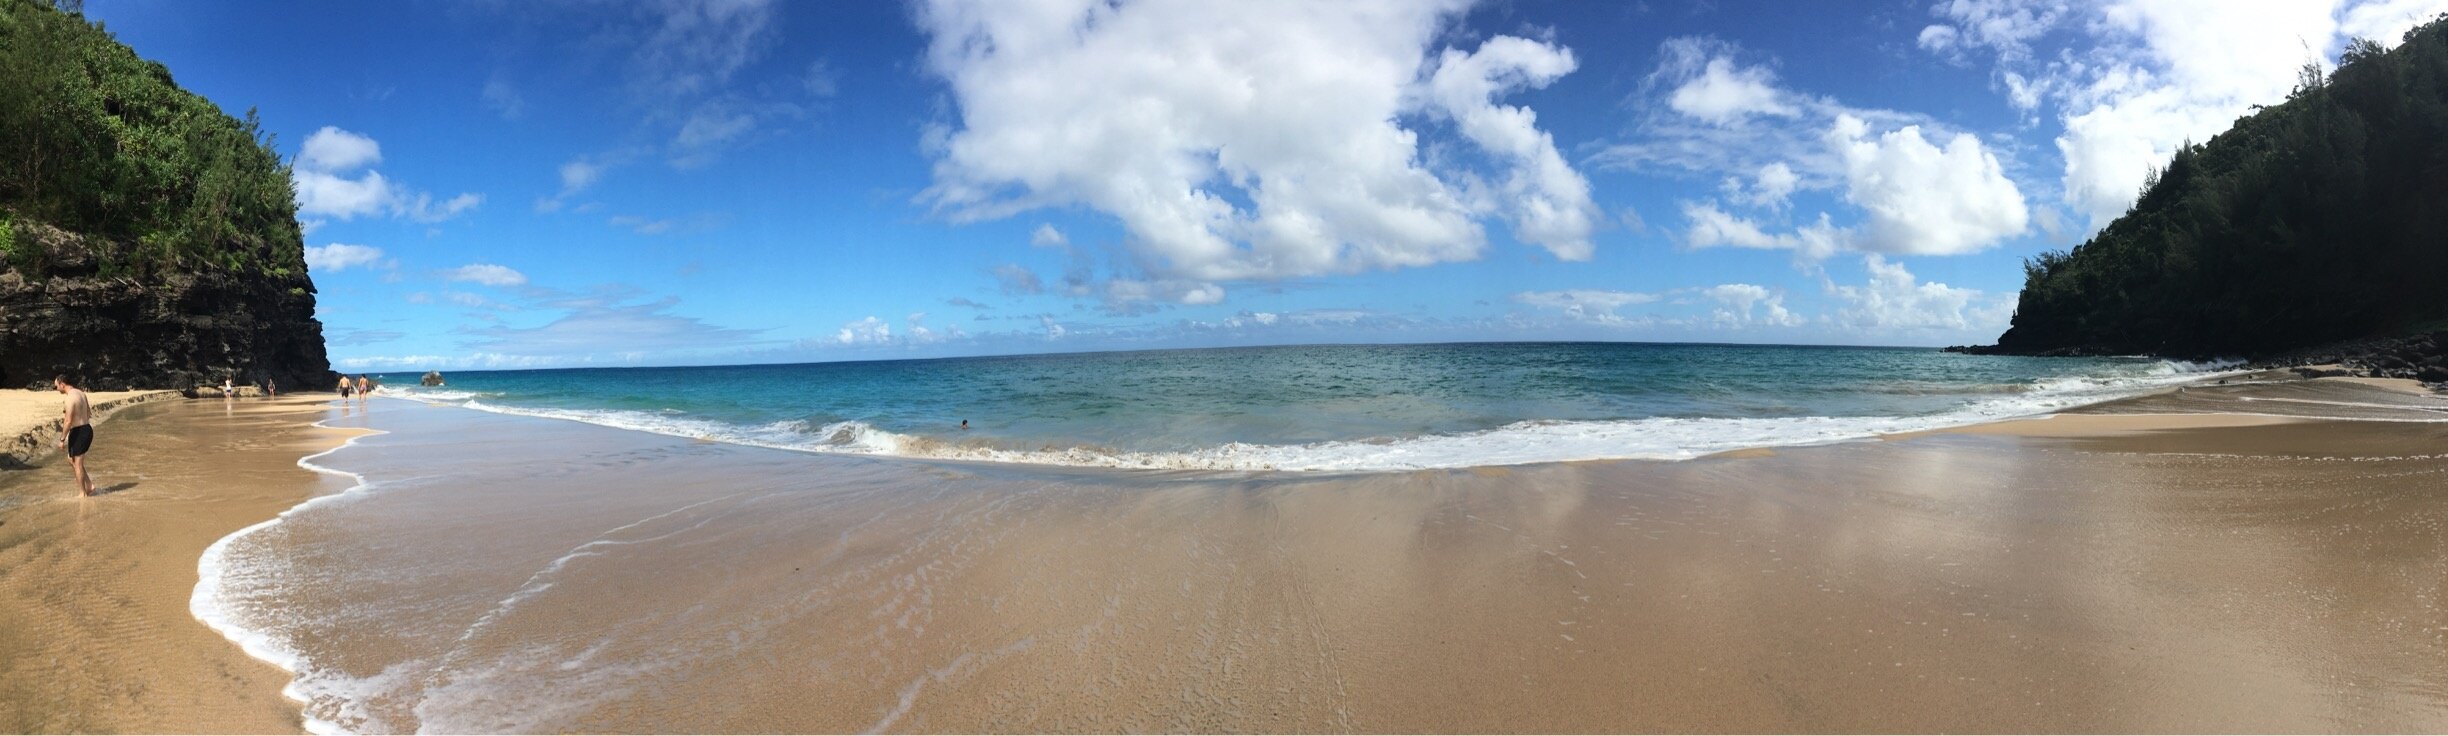 Hanakapi'ai Beach, Hanalei, Hawaii, United States of America